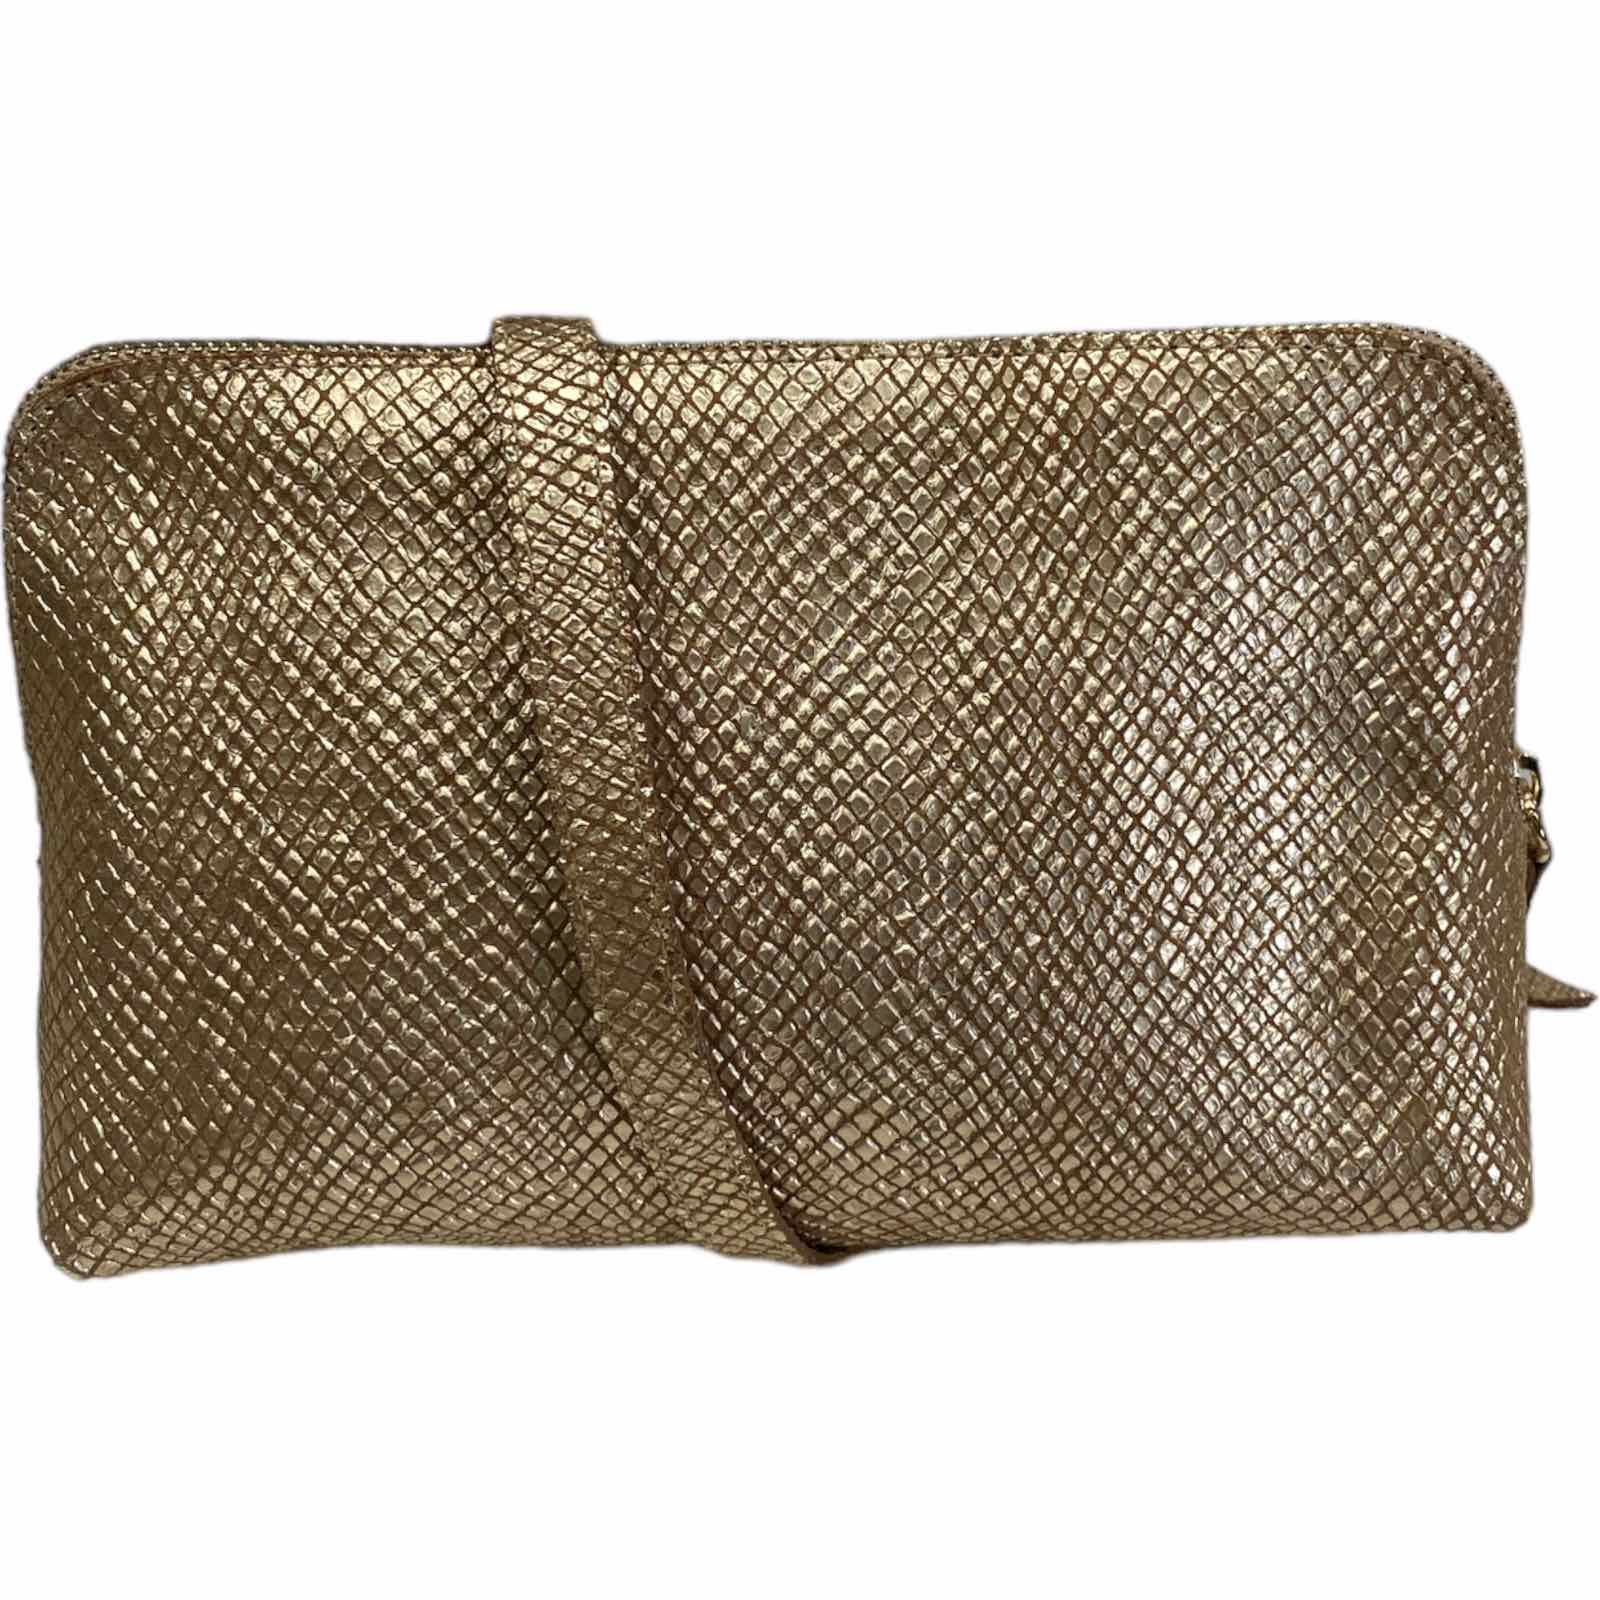 Box XL. Gold leather messenger bag